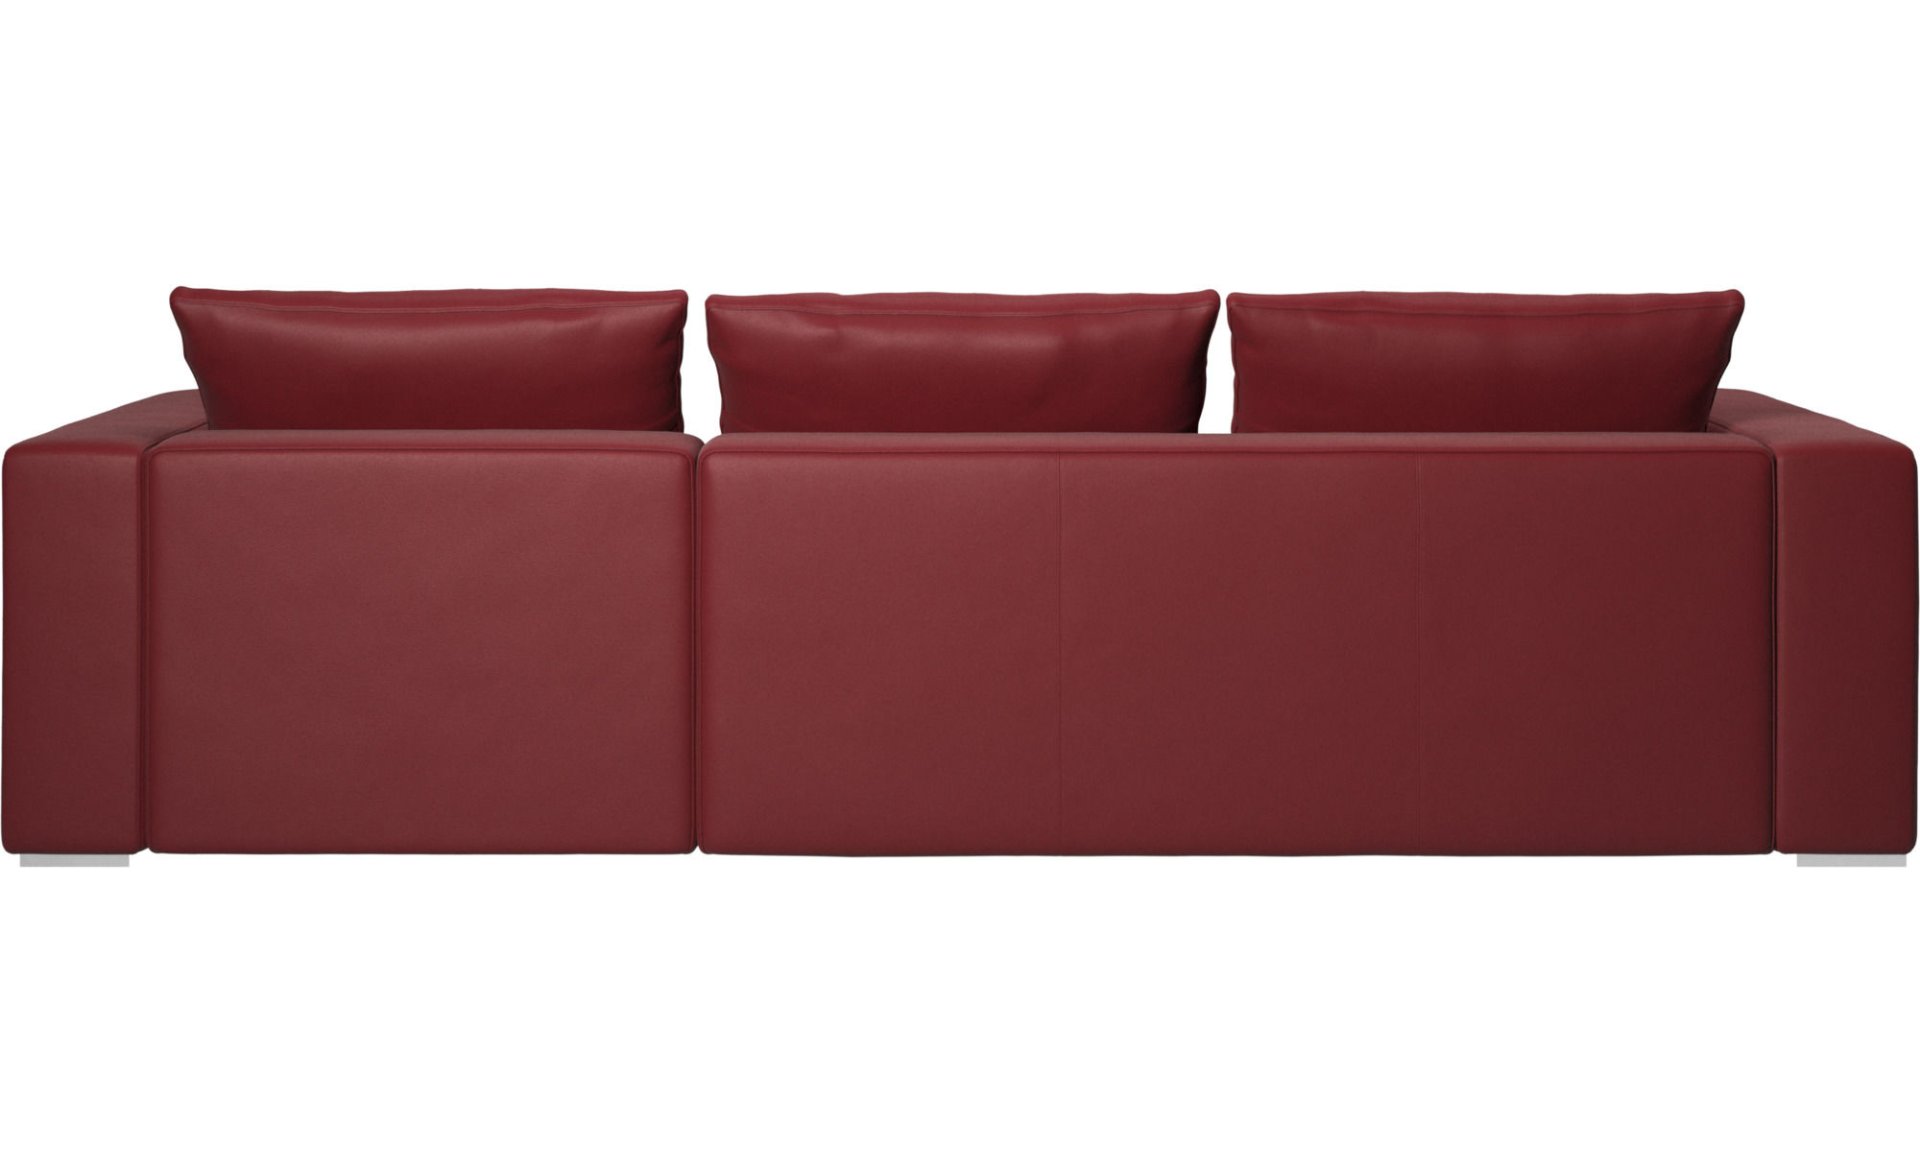 Mezzo Sofa with Rest Unit - Love That Design